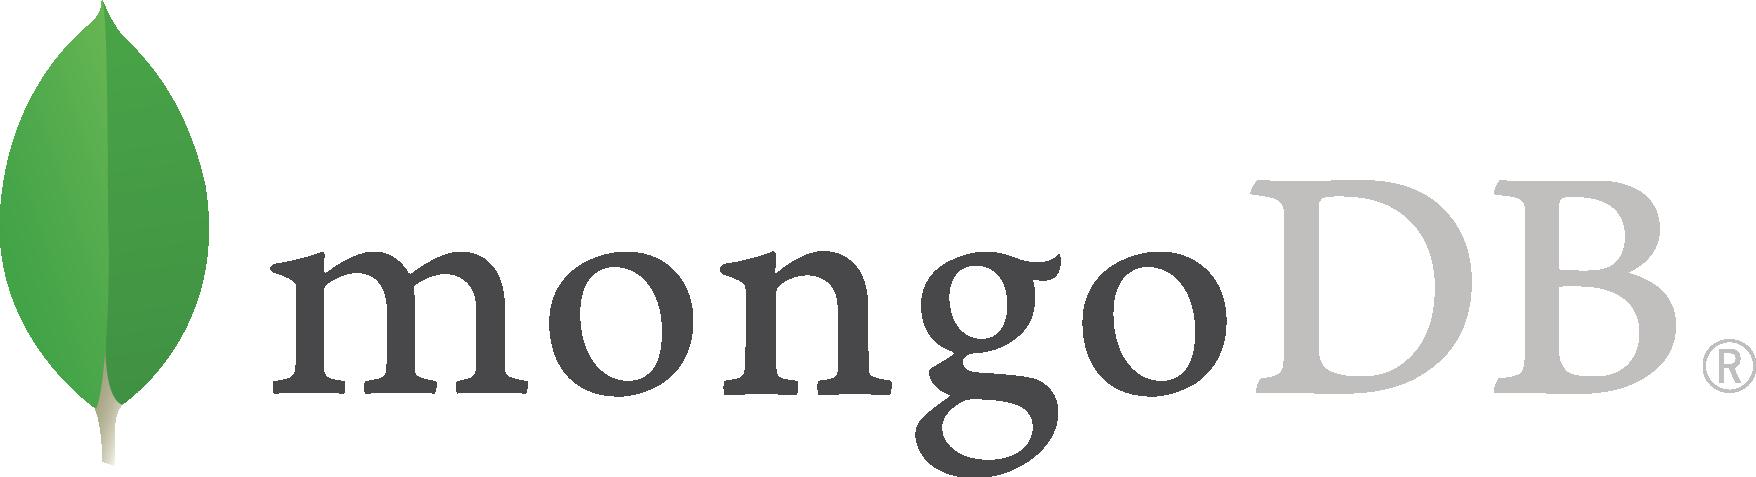 MongoDB neu unter eigener Server Side Public License